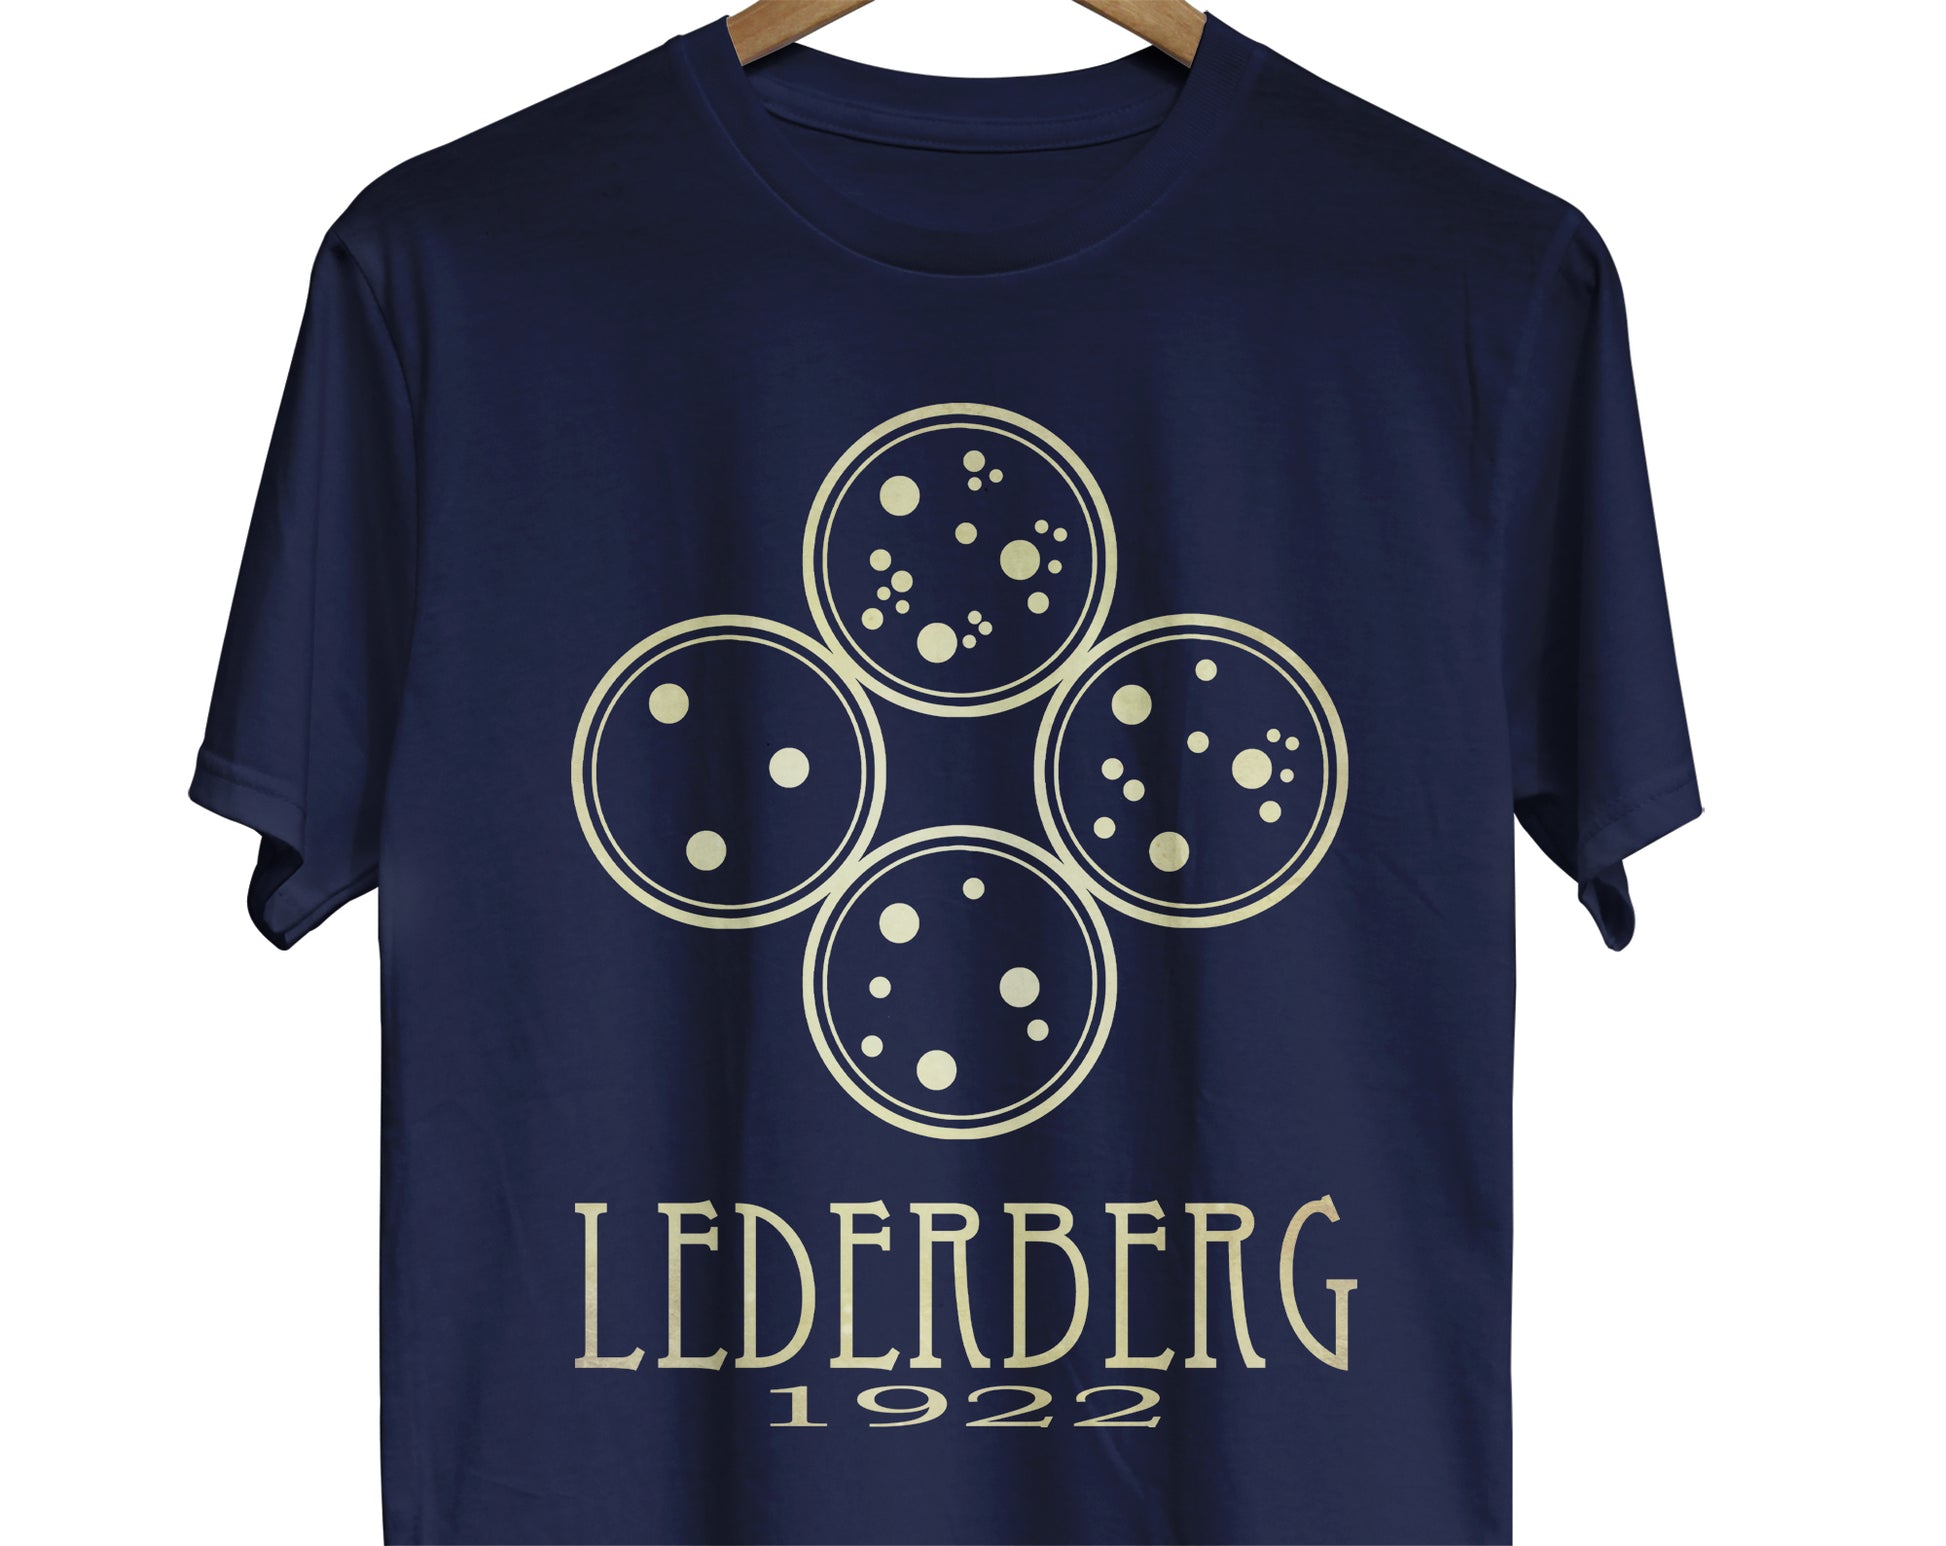 Esther Lederberg microbiology tshirt with petri dish replica plating design